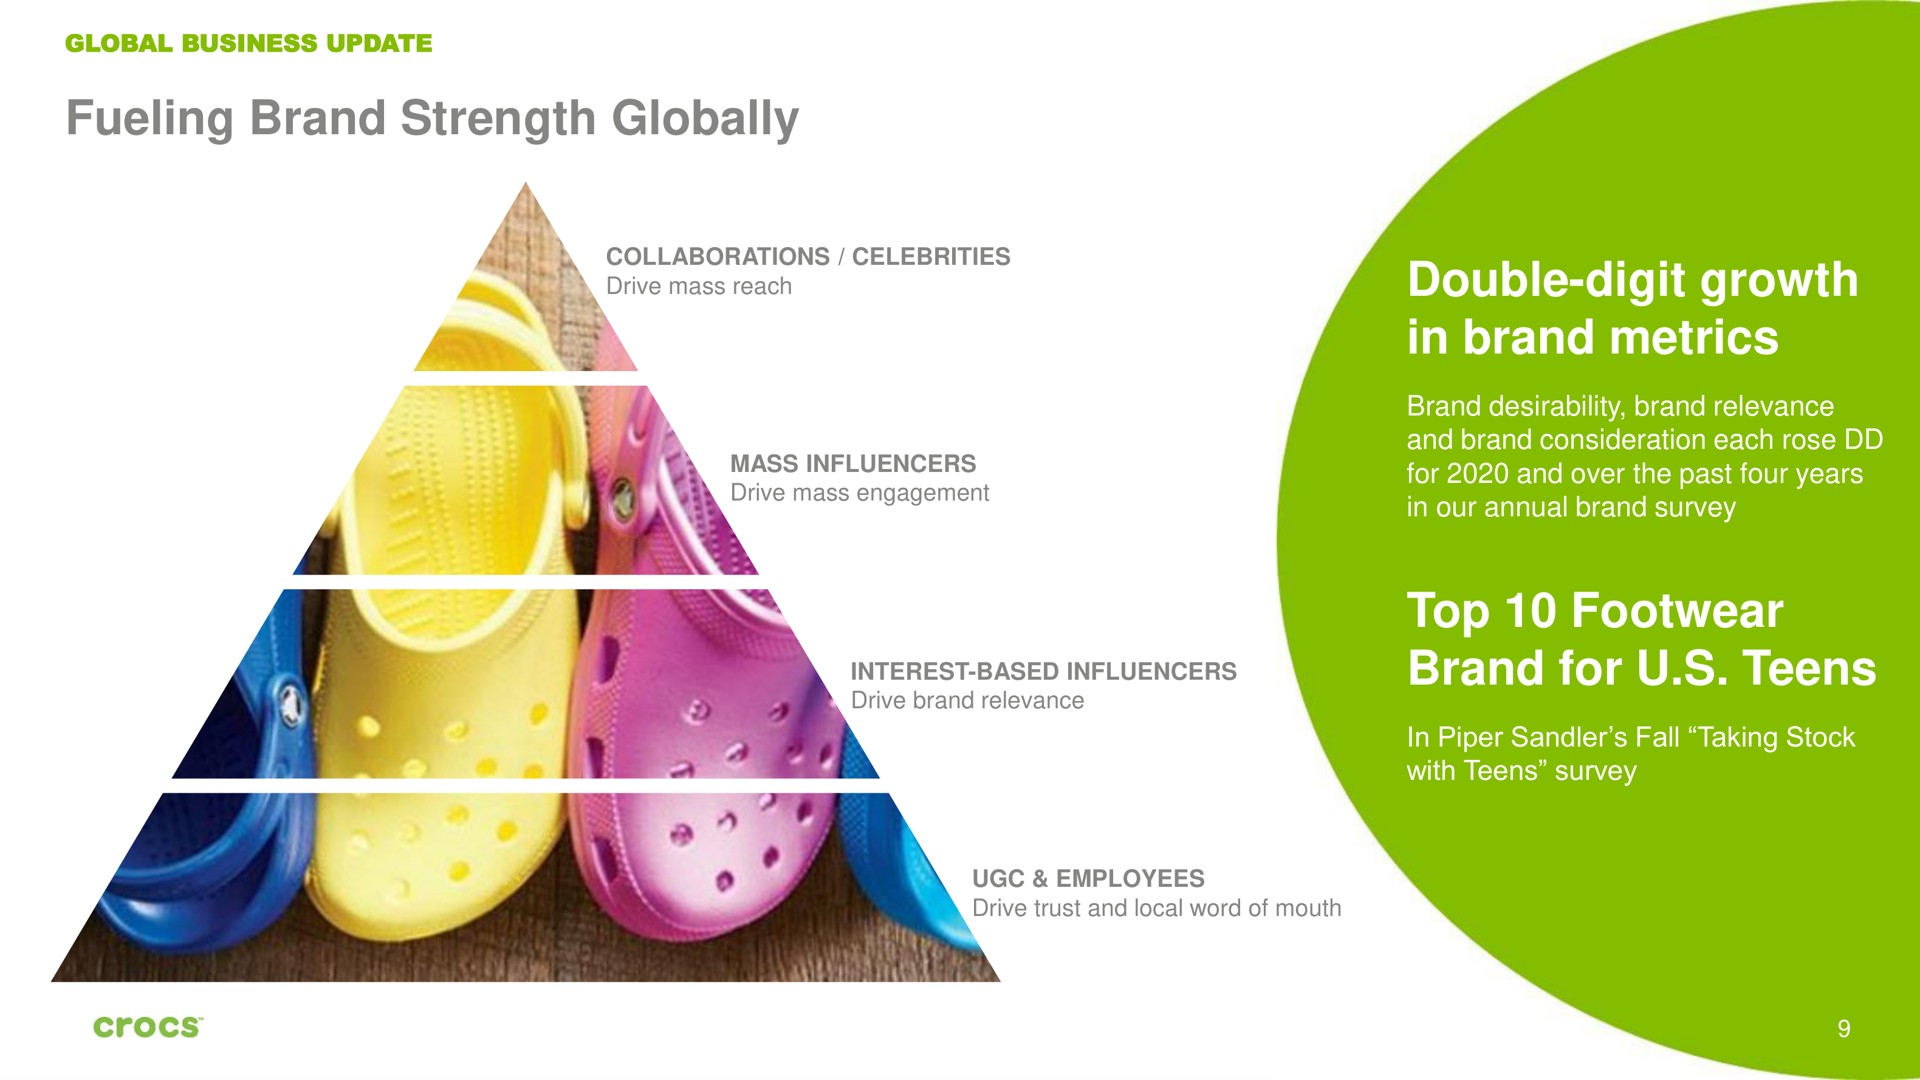 fueling brand strength globally double digit growth in brand metrics top footwear brand for teens | Crocs